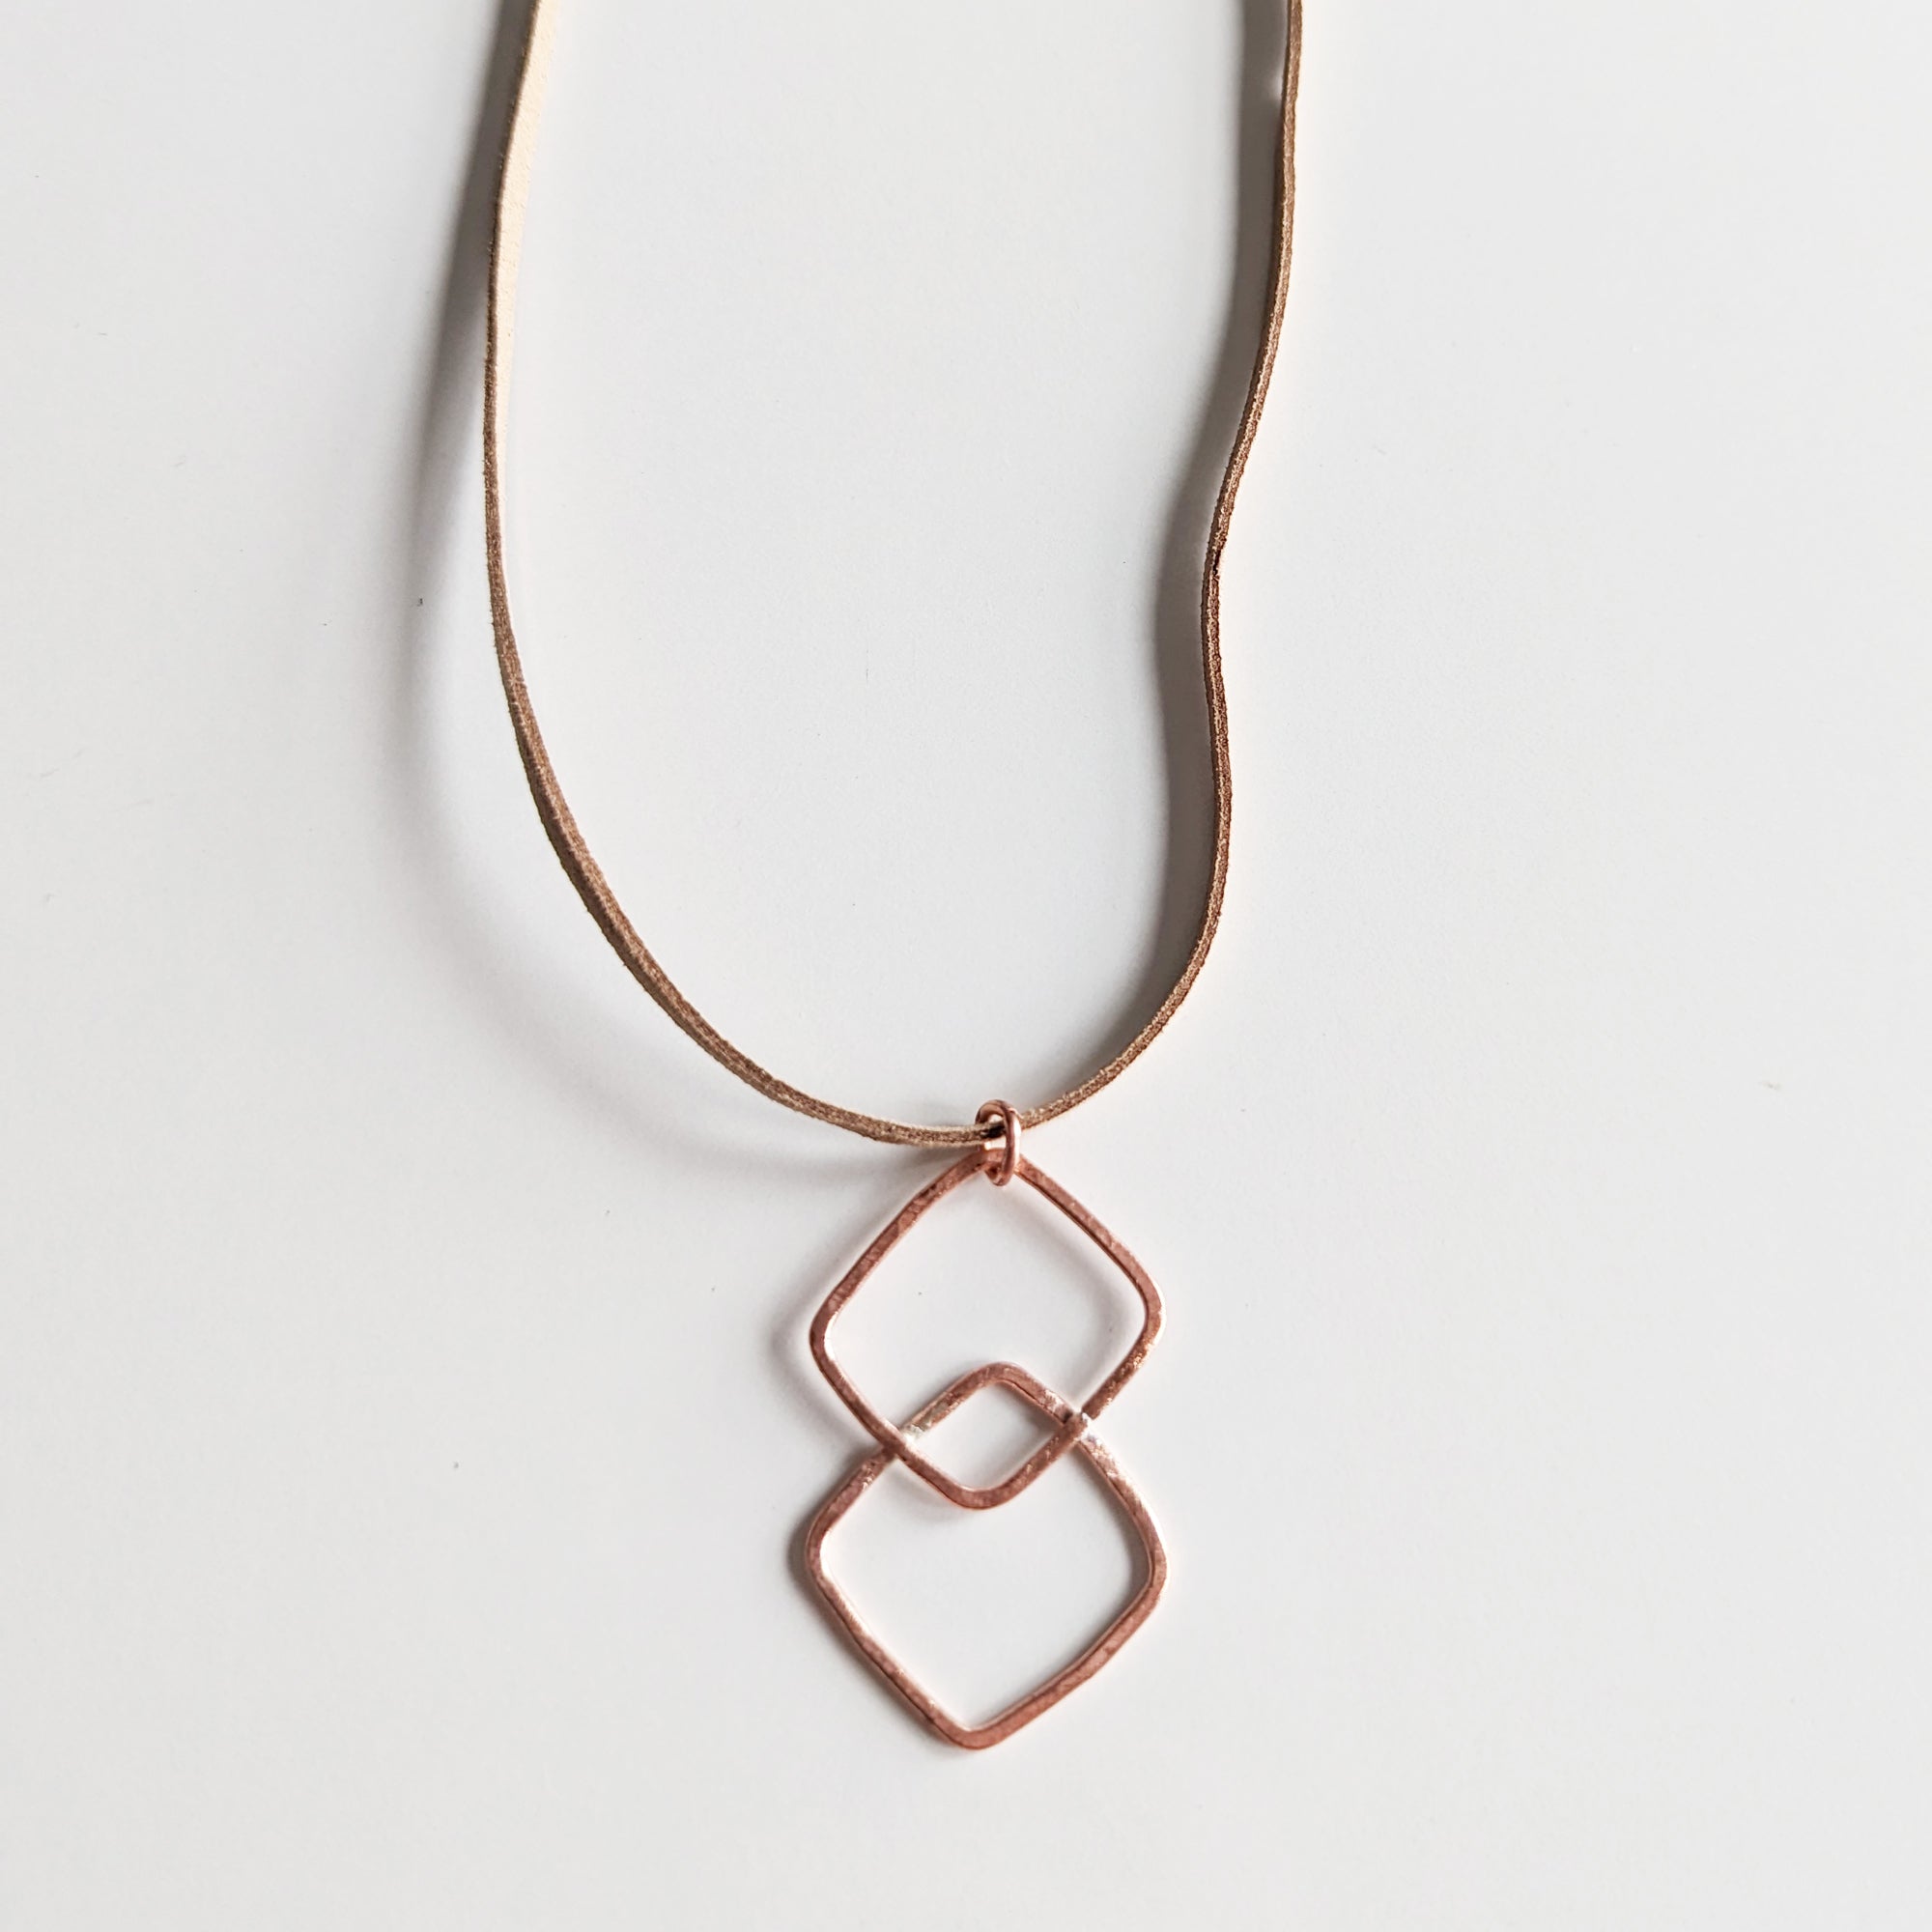 The Copper Double Square Necklace